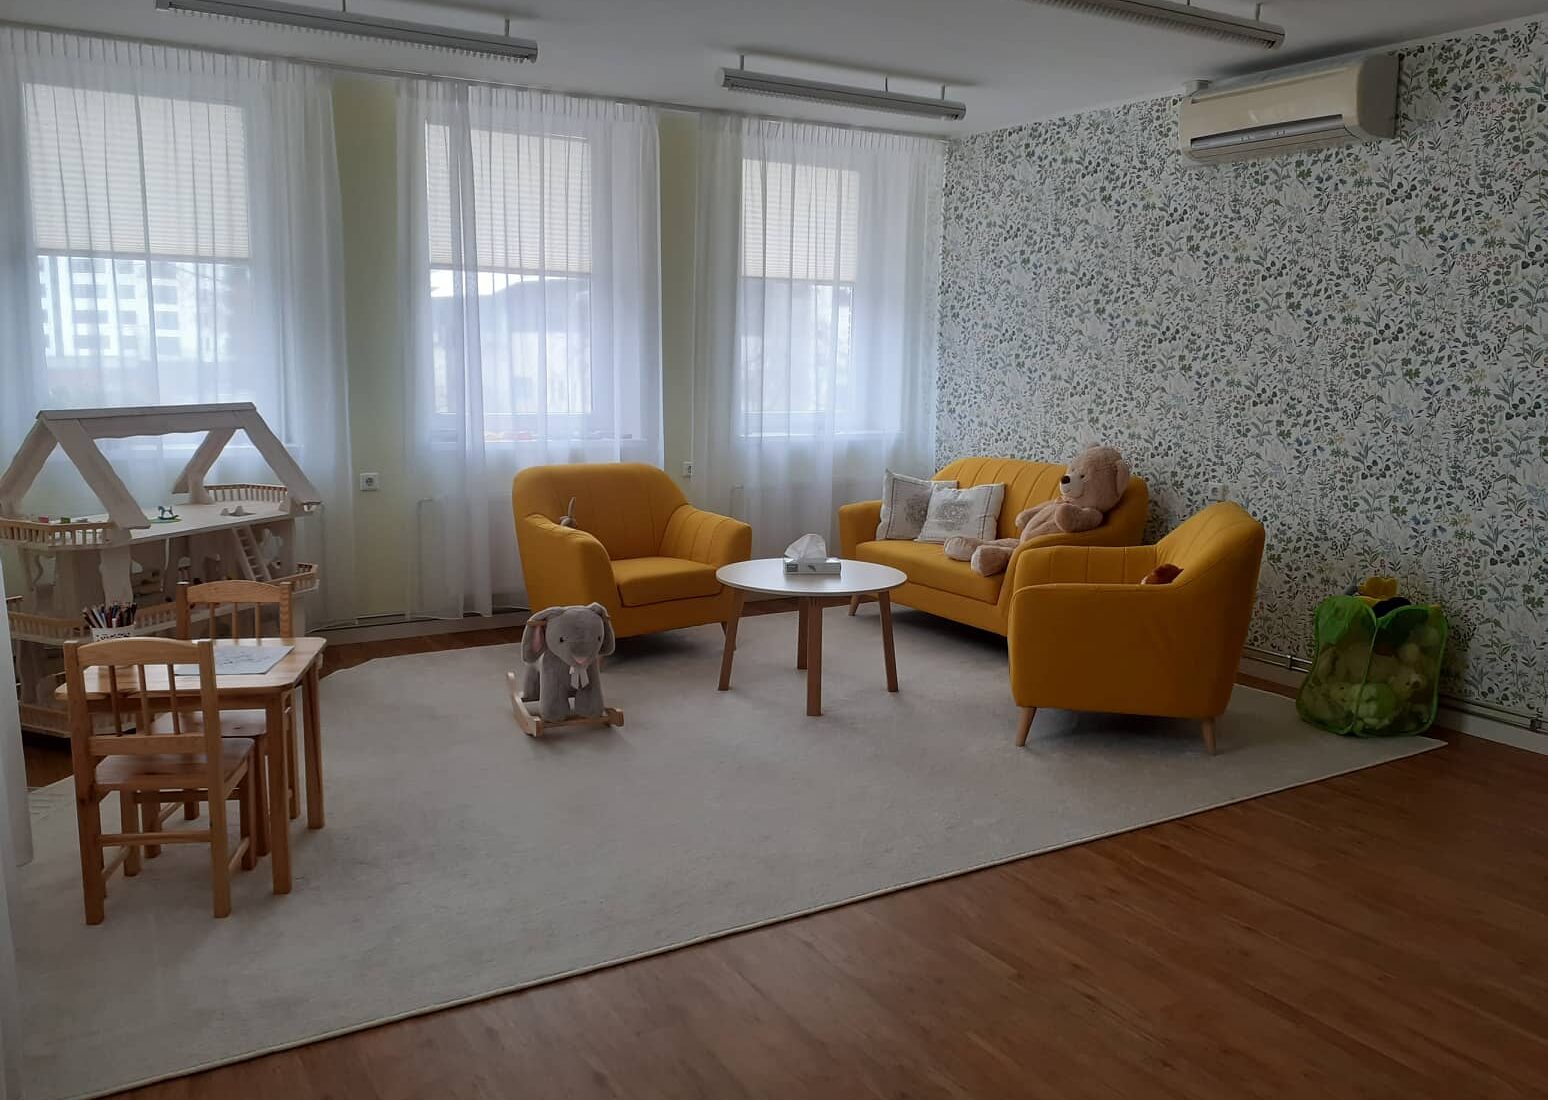 Therapyroom Barnahus Estonia